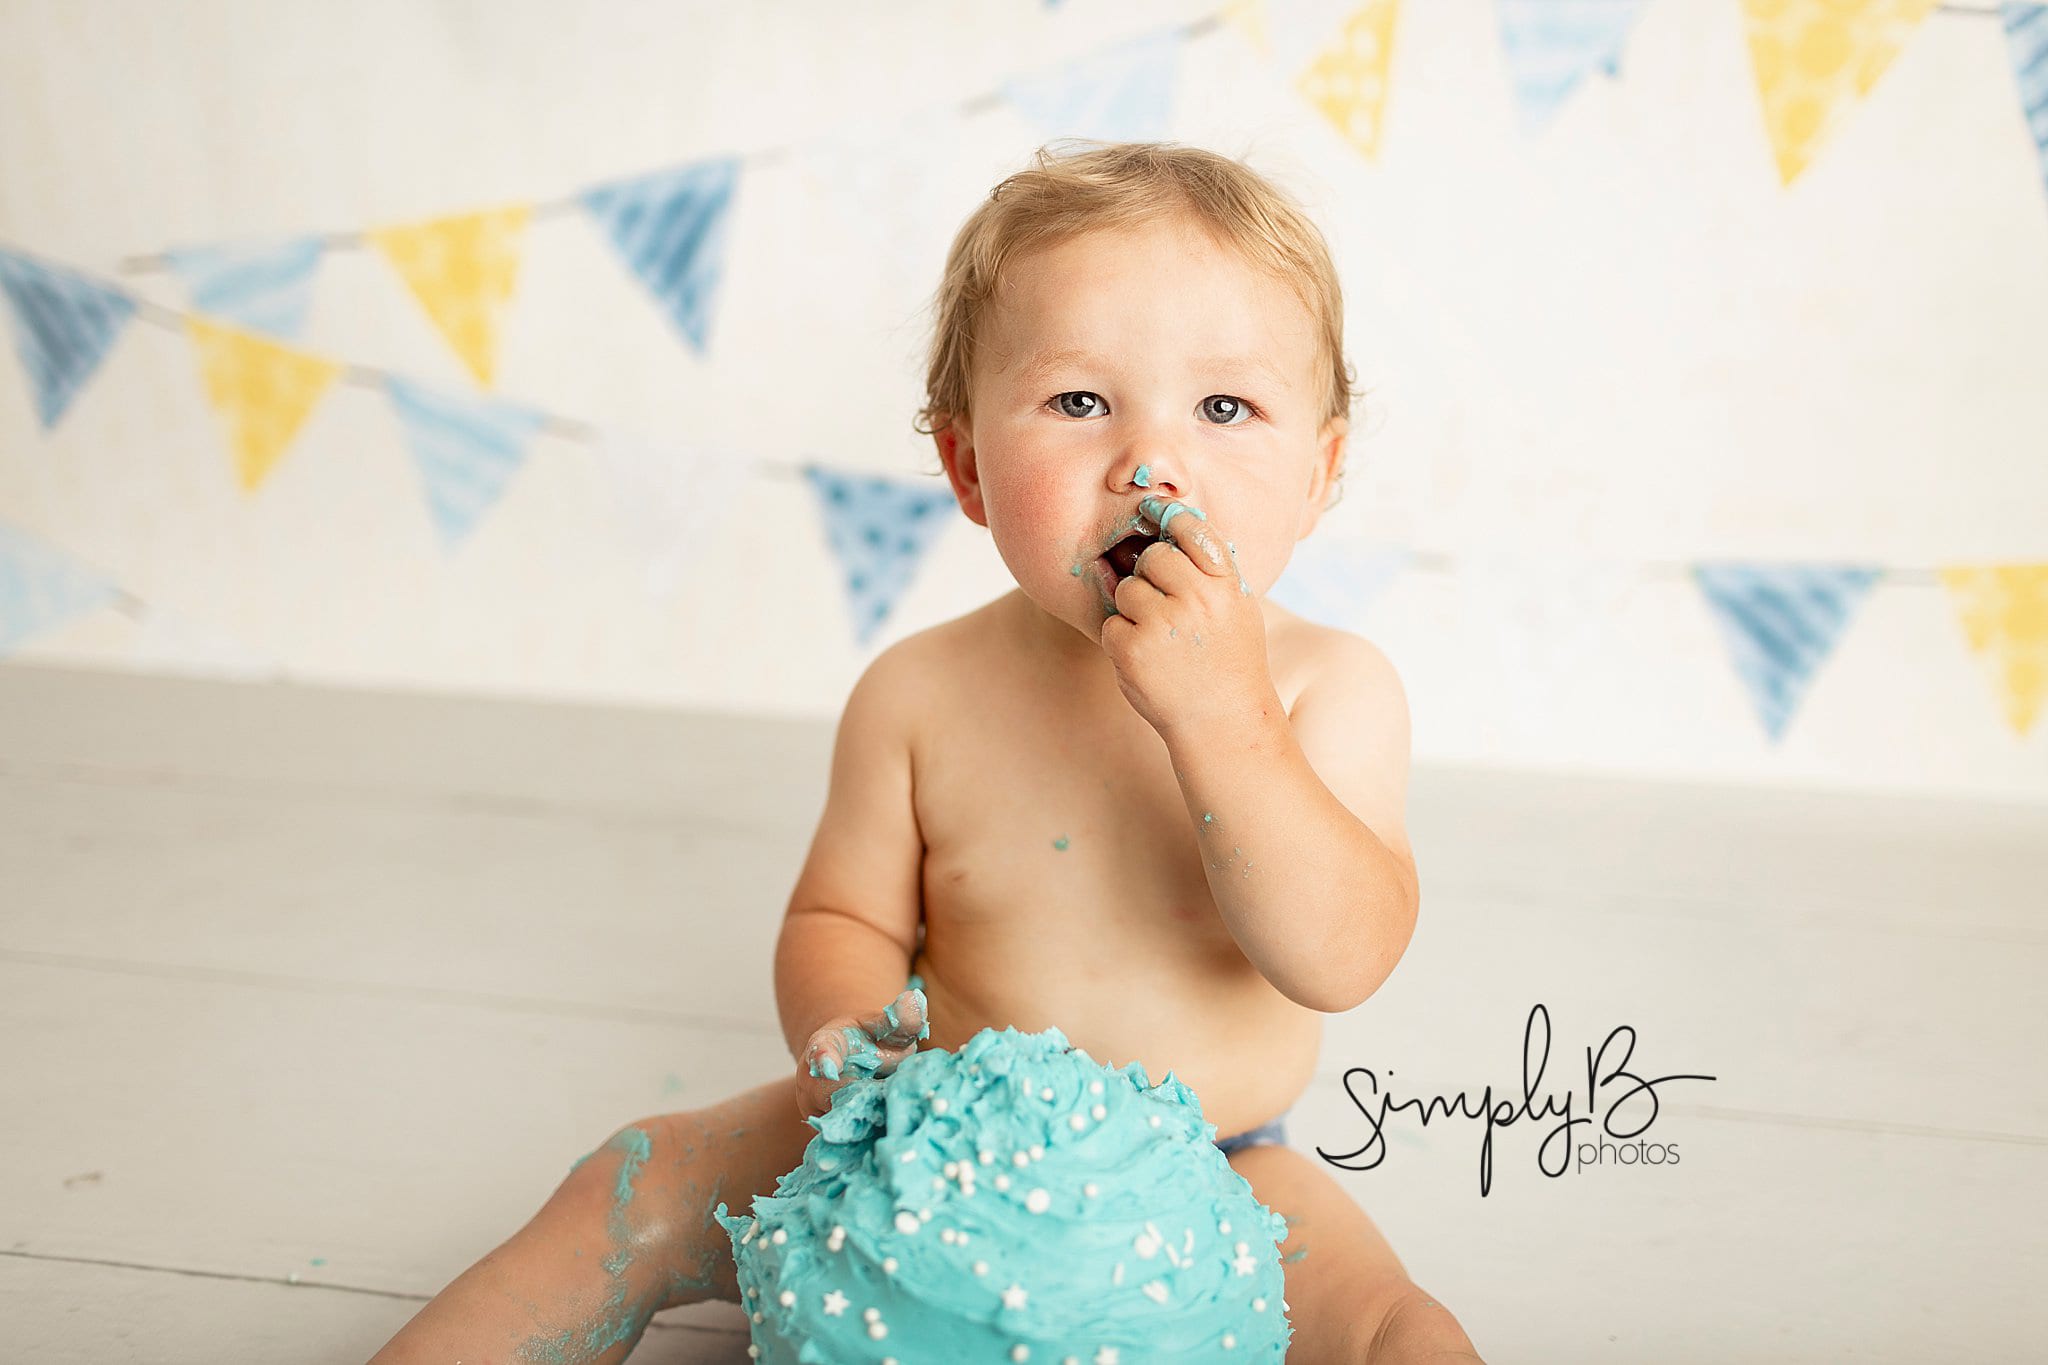 Edmonton cake smash photography studio baby boy